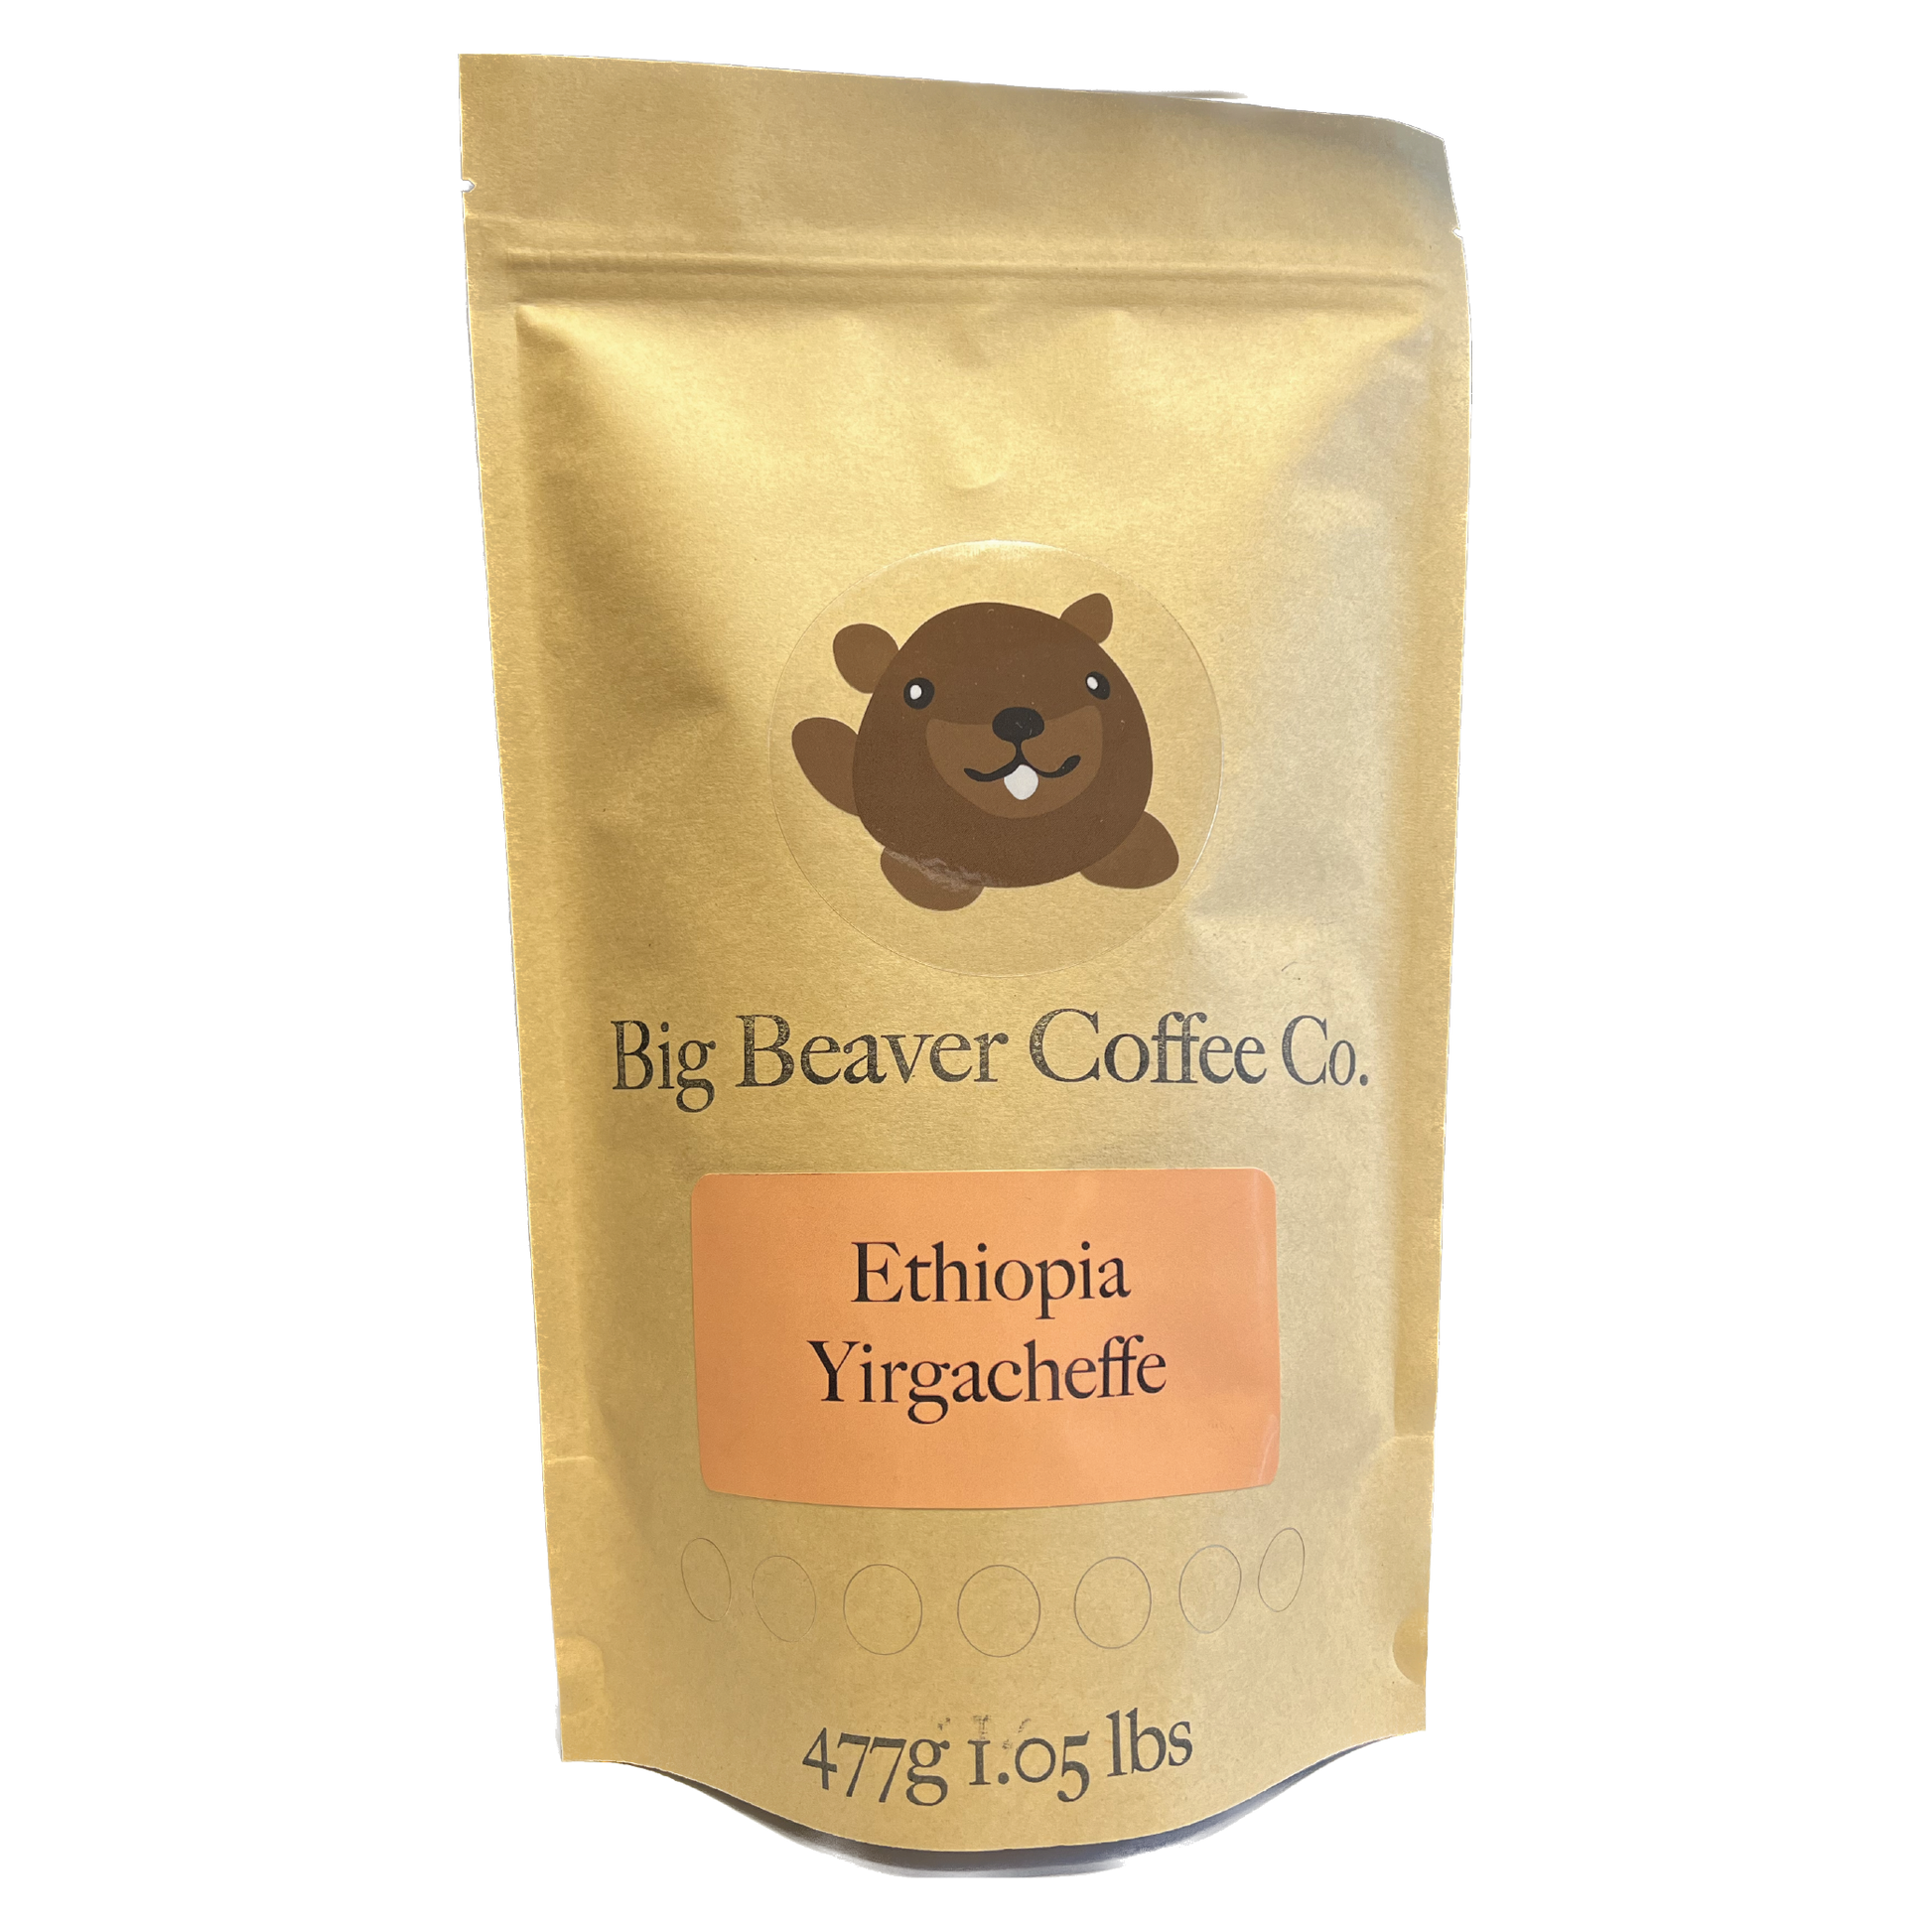 Big Beaver Coffee, Small Batch Roasting, Fluid Bed Roasting, Origin Coffee, Ethiopia Yirgacheffe, Whole Bean, Ground Coffee.